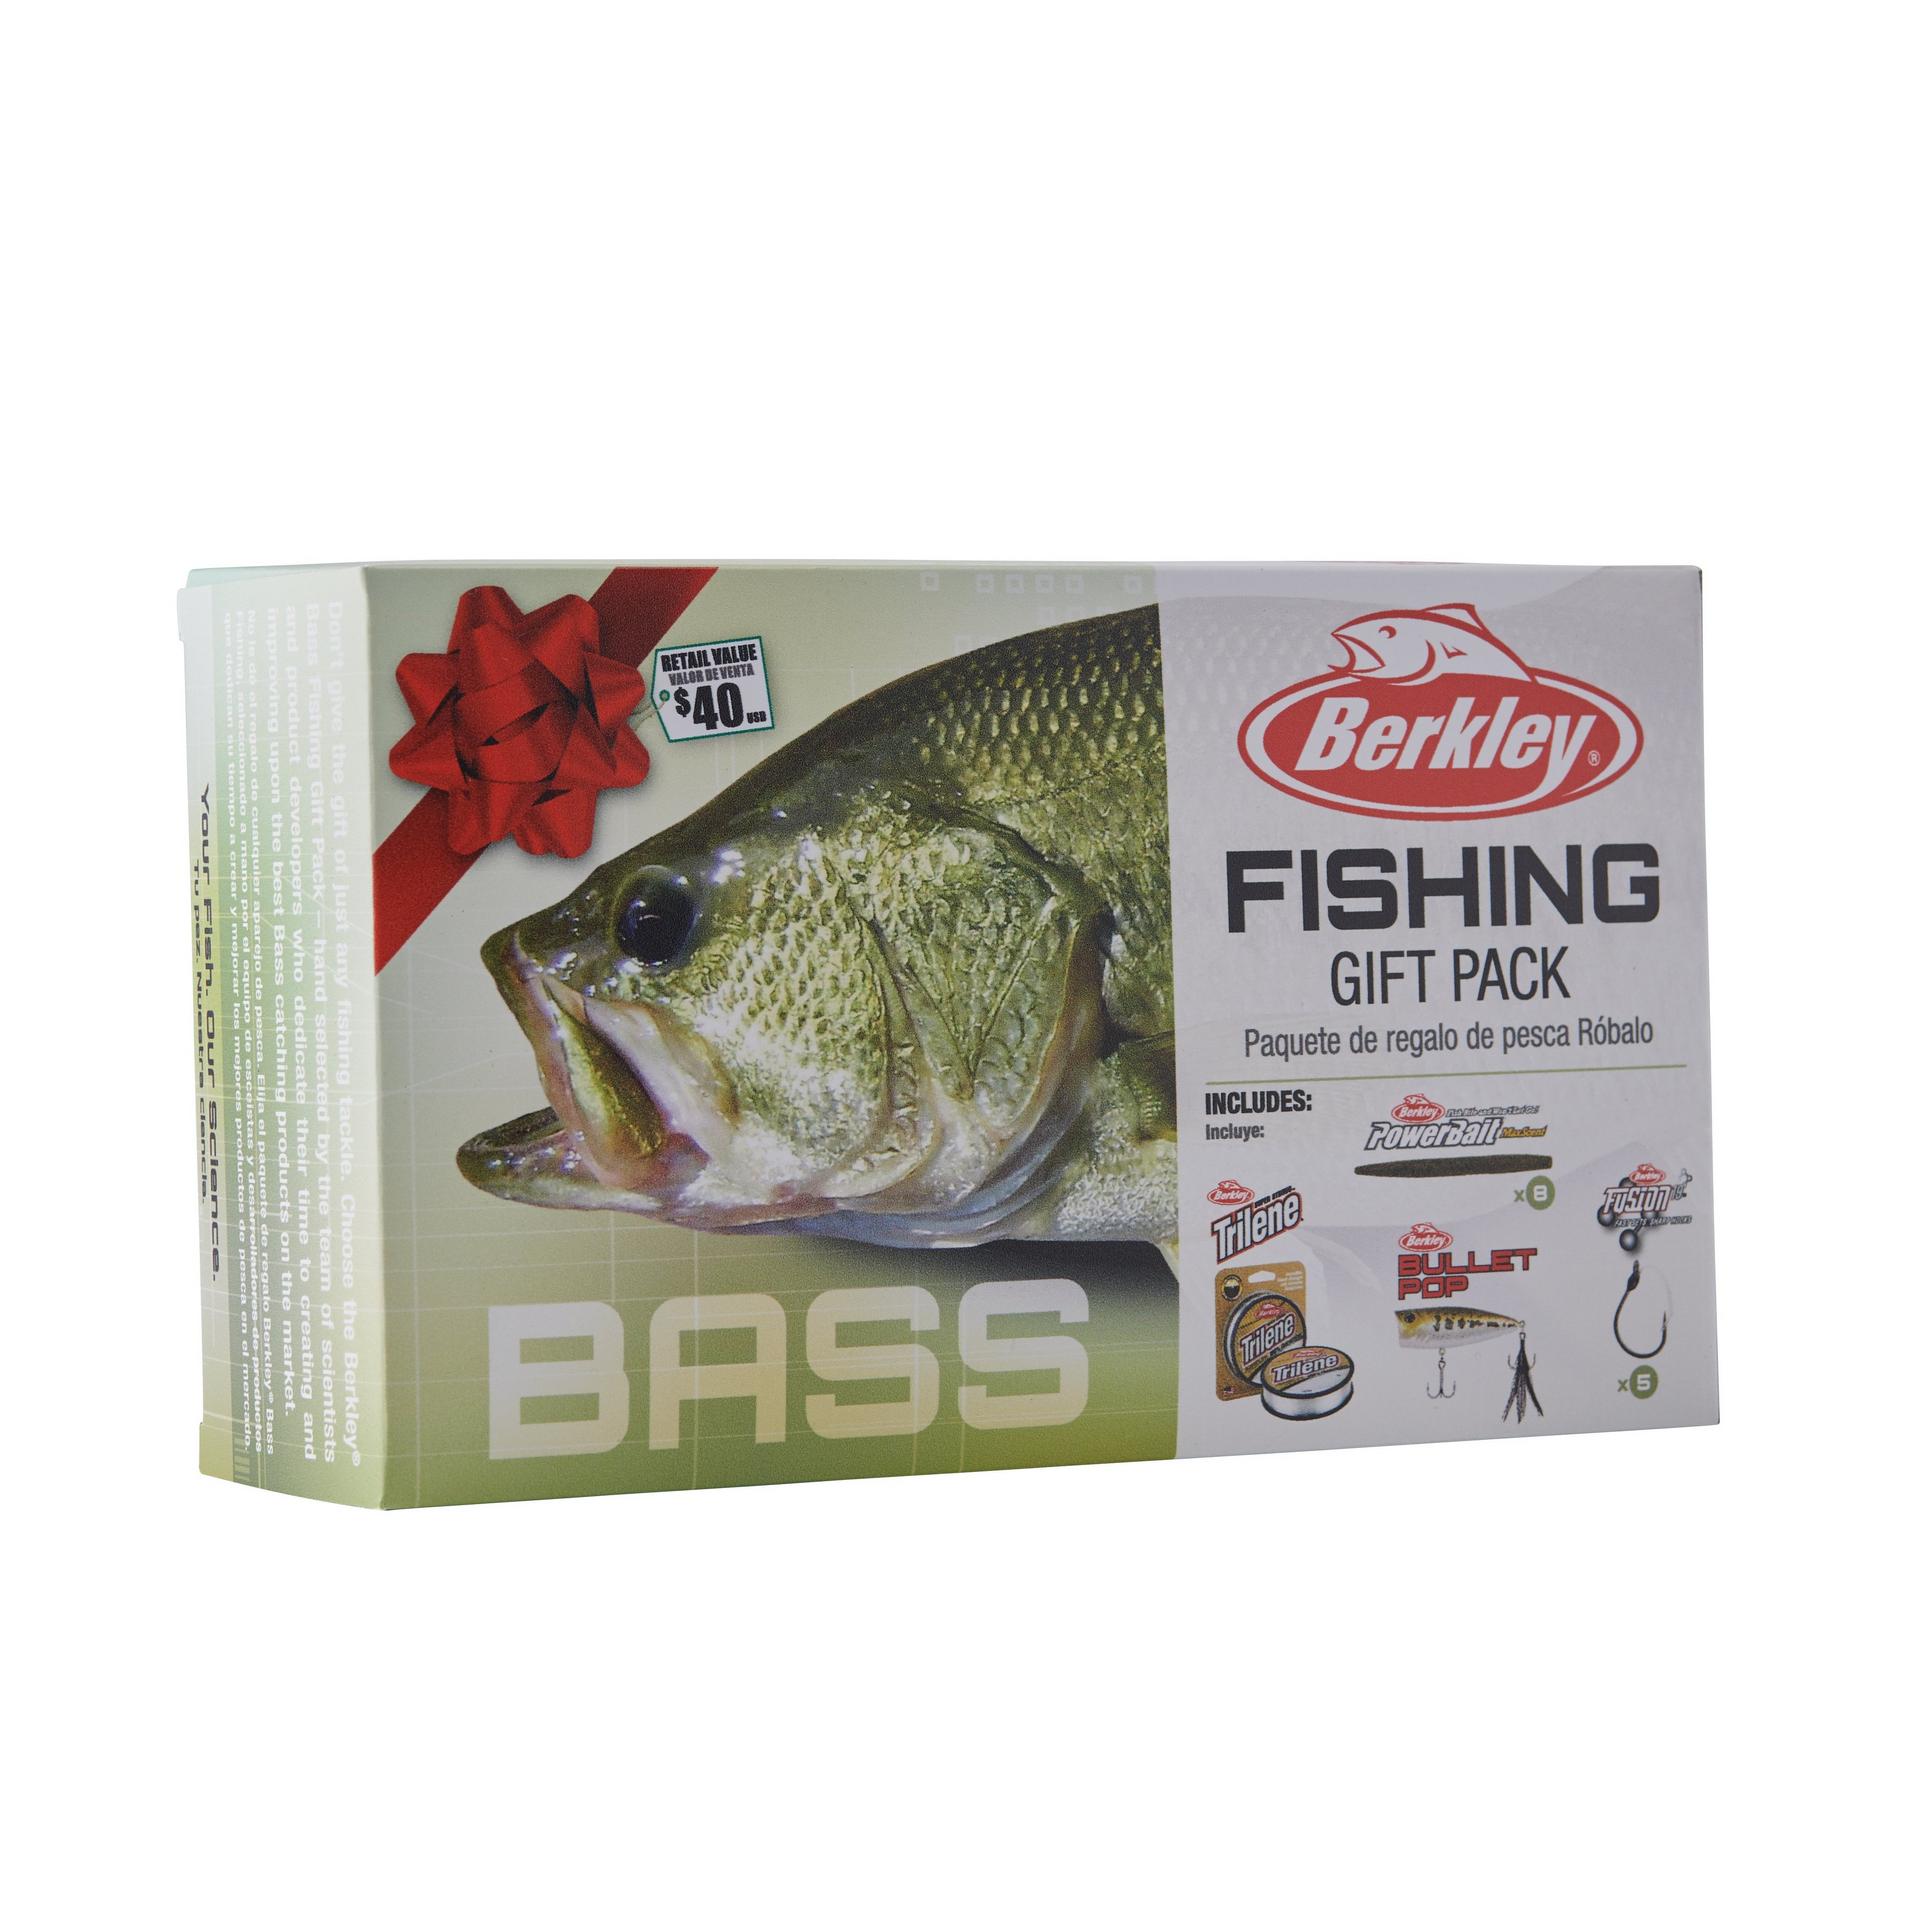 Berkley Fishing Gift Pack Bass 2020 alt1 | Berkley Fishing